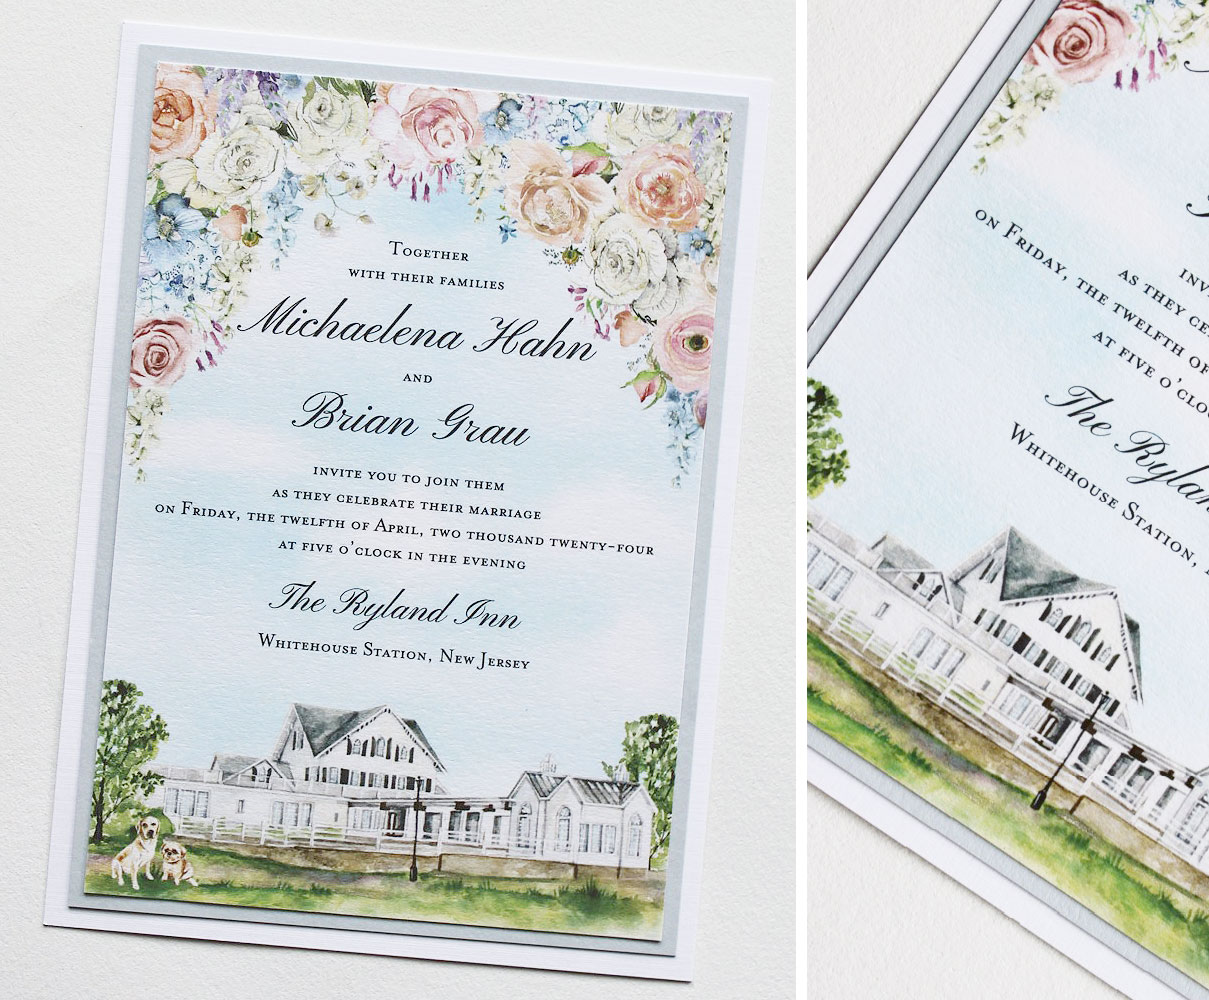 ryland-inn-wedding-invitations